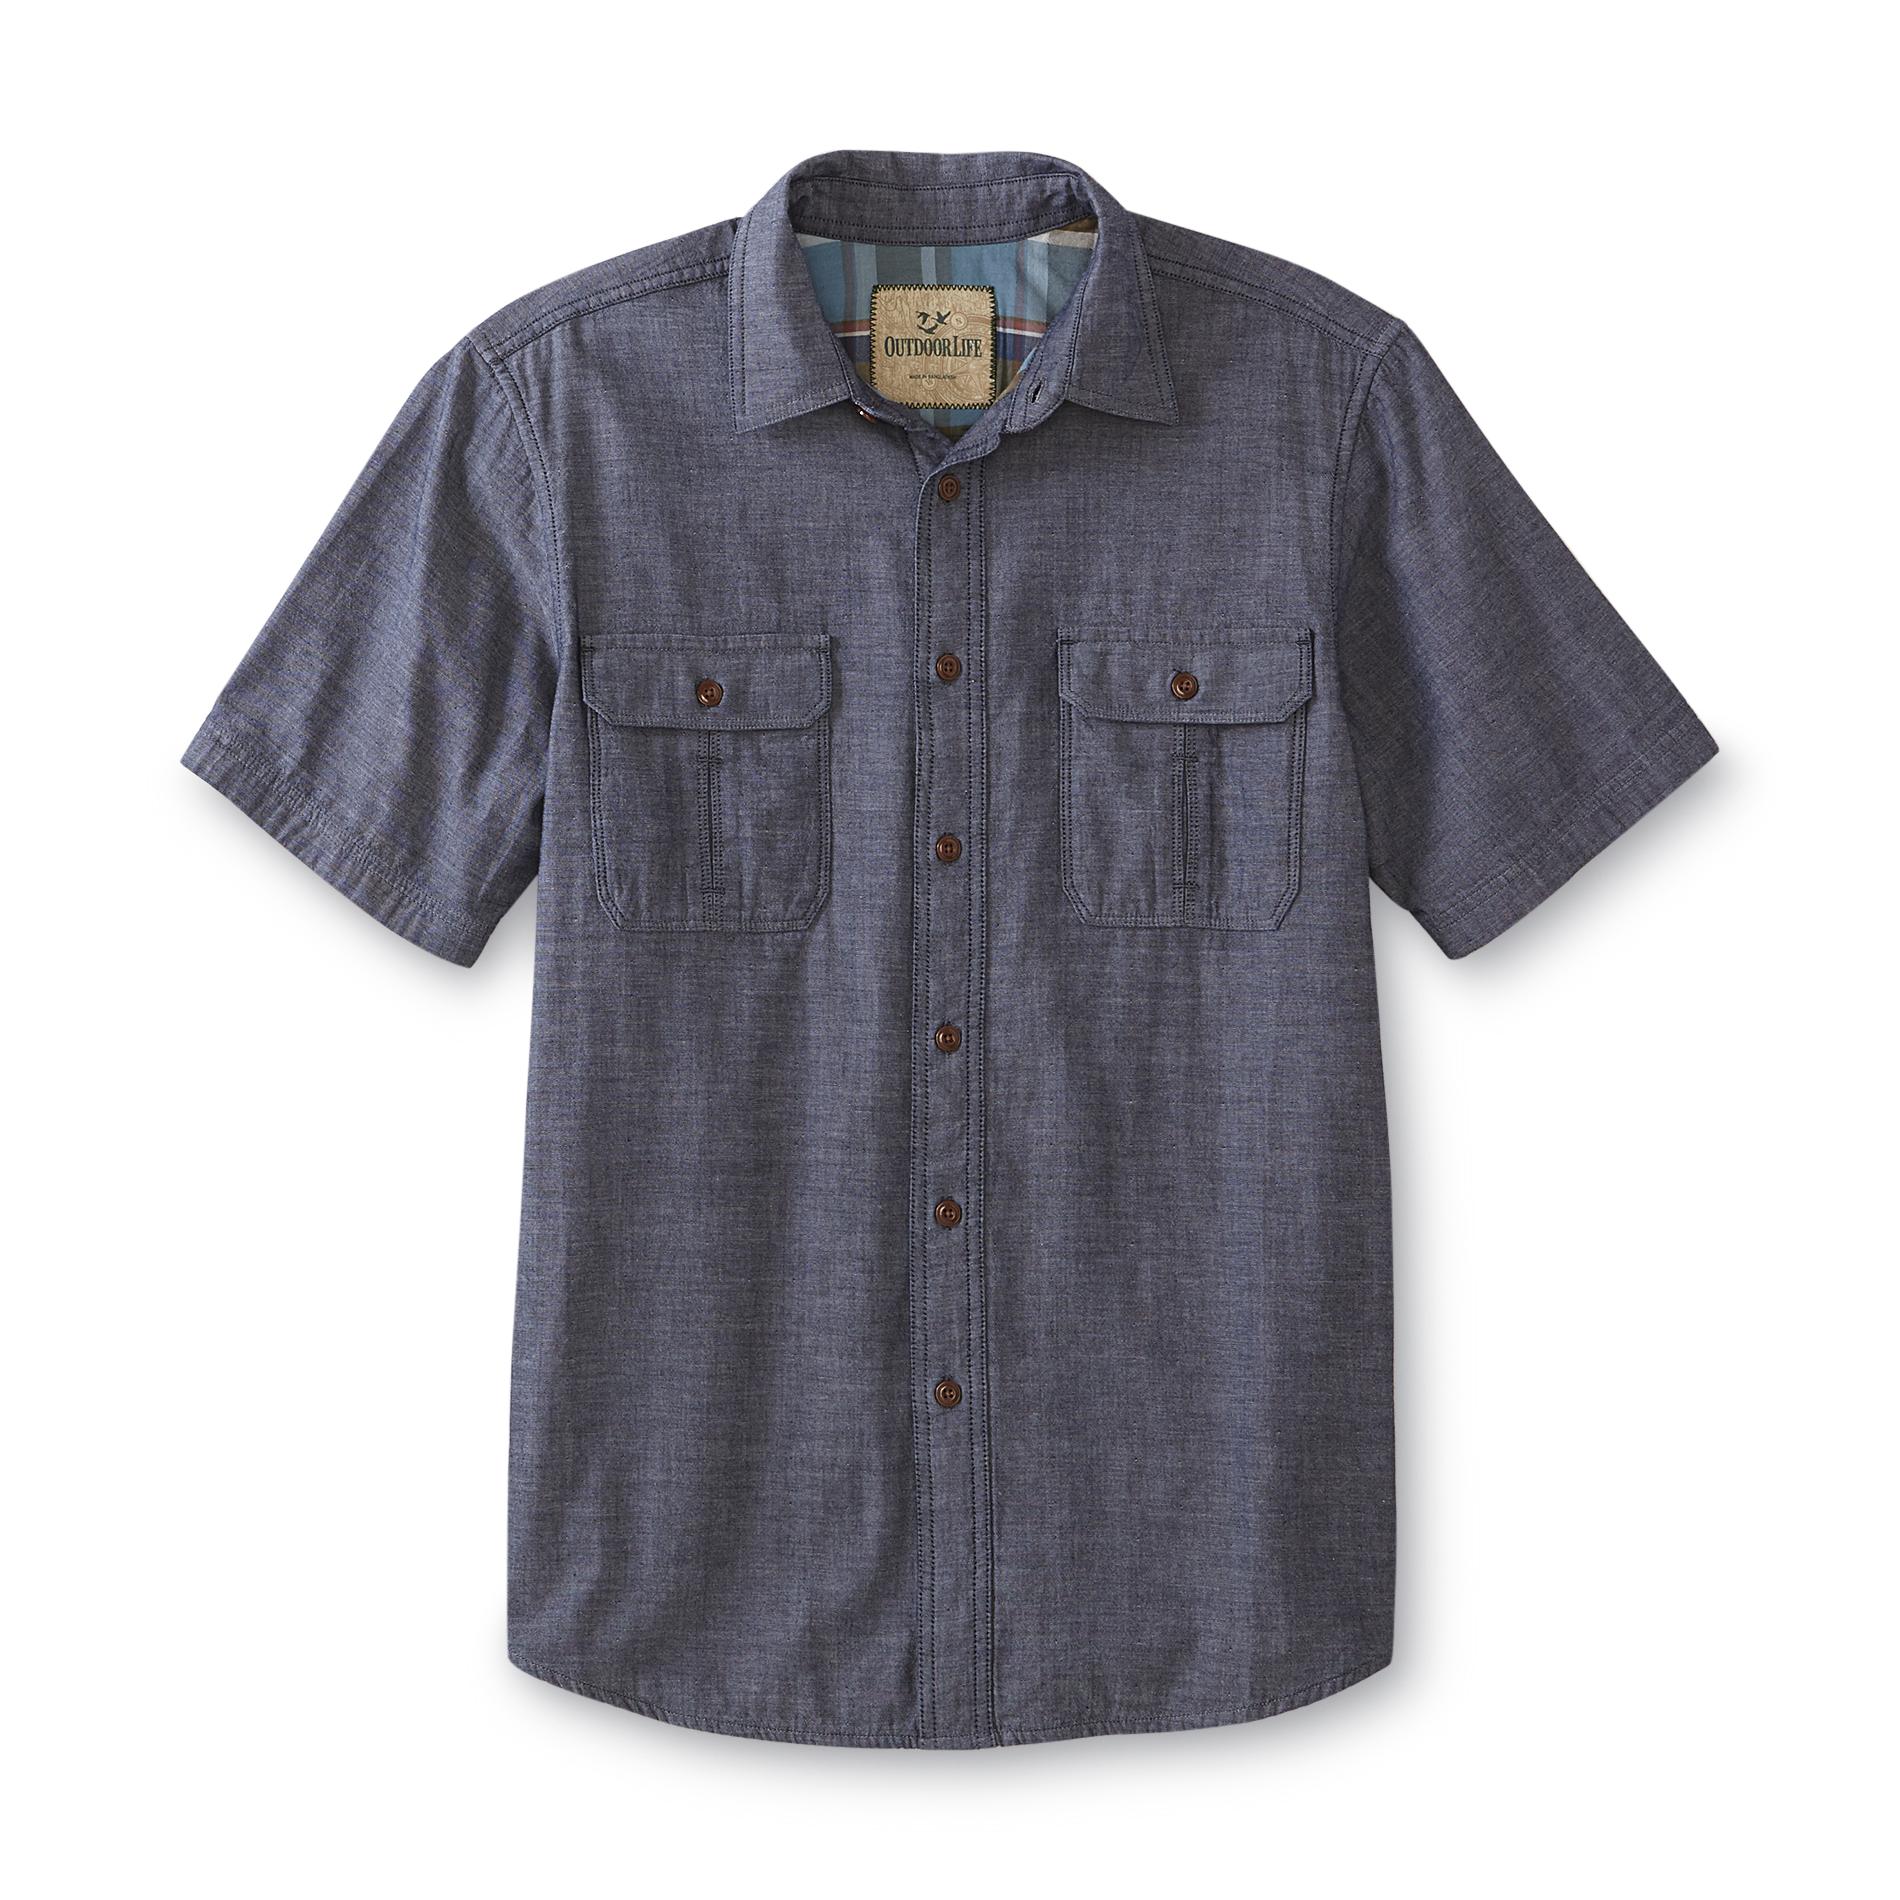 Outdoor Life Men's Short-Sleeve Shirt - Sears